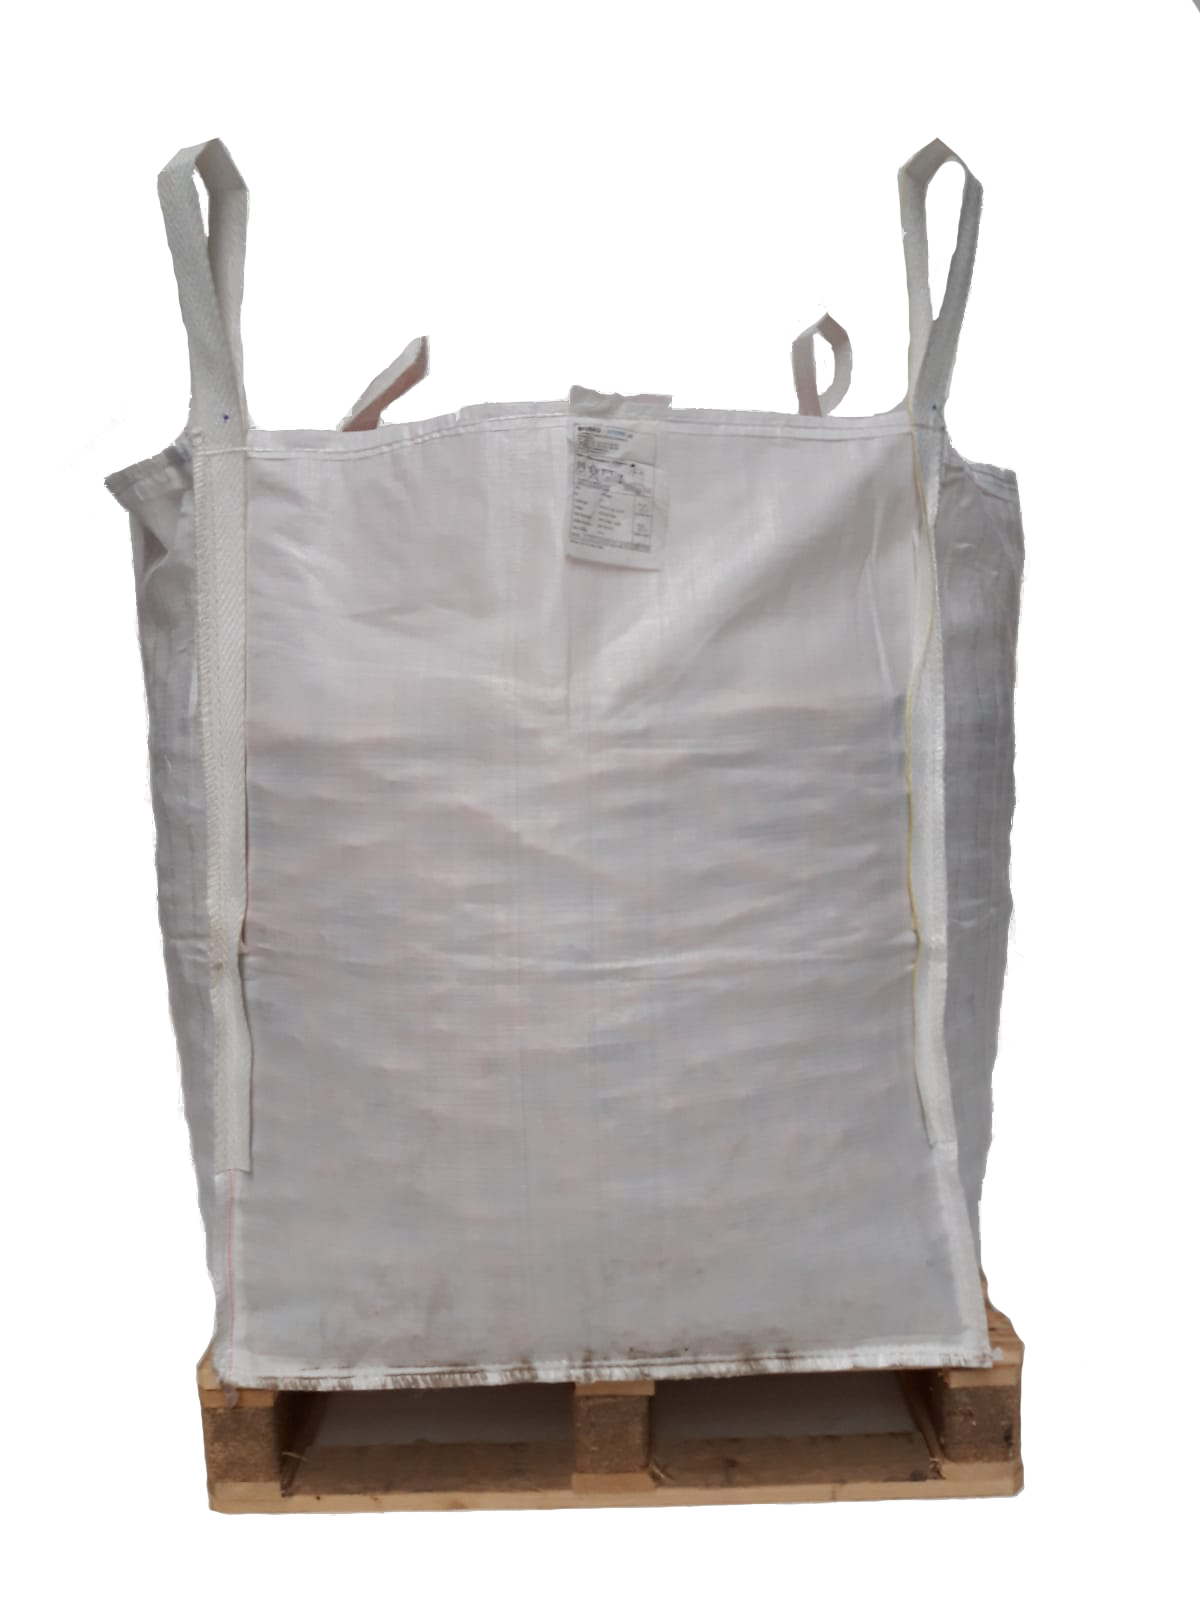 ☀️ 4 Stk BIG BAG 135 cm hoch 106 x 72 cm Bags BIGBAGS Säcke CONTAINER #18 ☀️☀️ 